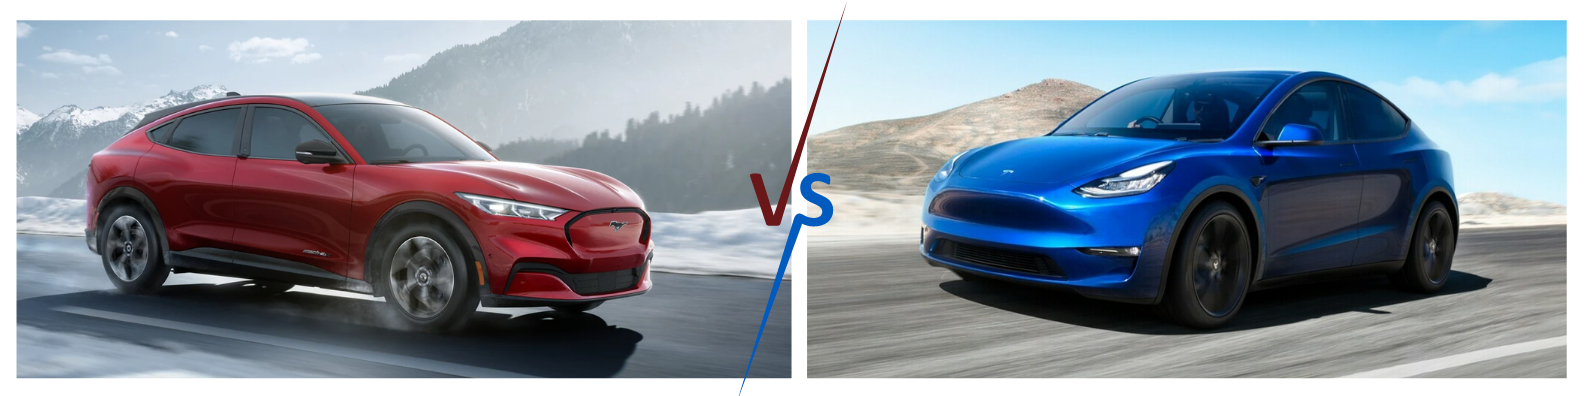 Tesla Model X vs Tesla Model Y